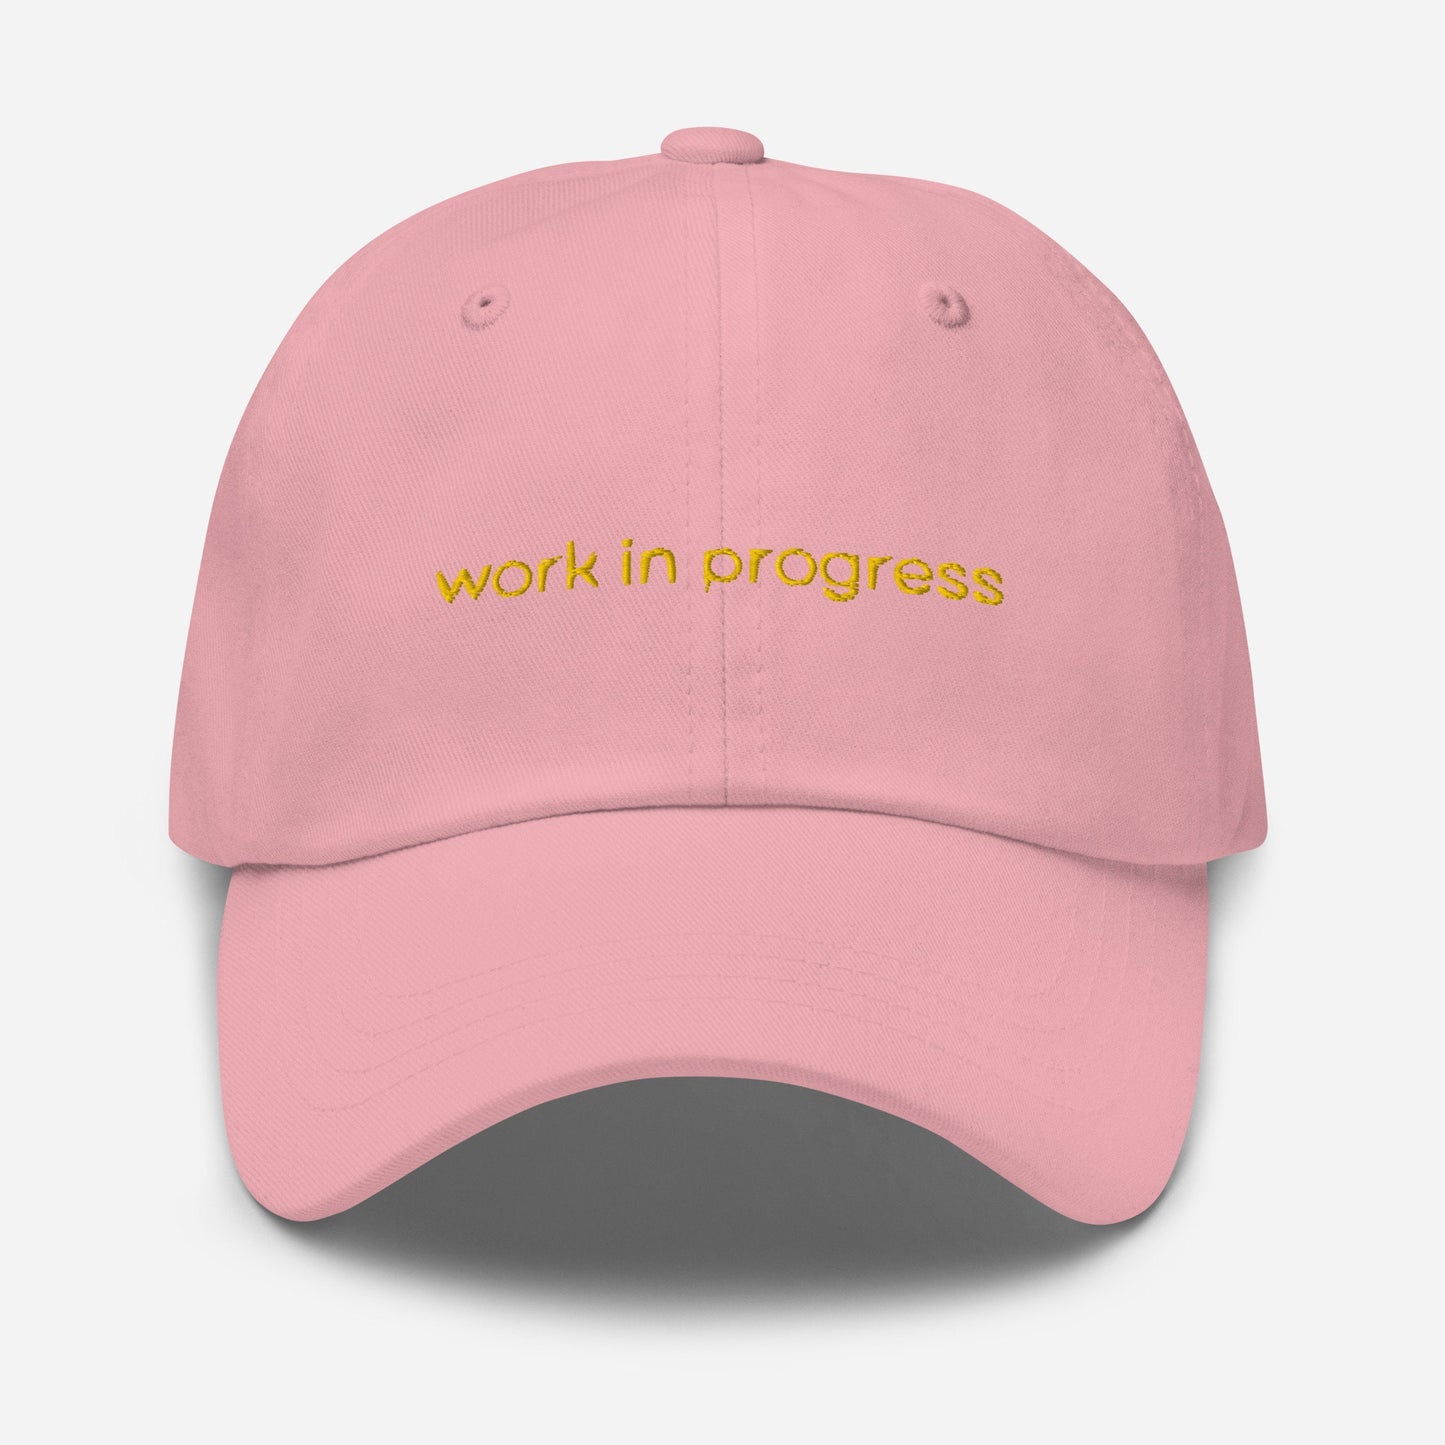 Work in Progress Dad Hat - Motivation, self improvement, manifesting gift - Handmade Embroidered Cotton Cap